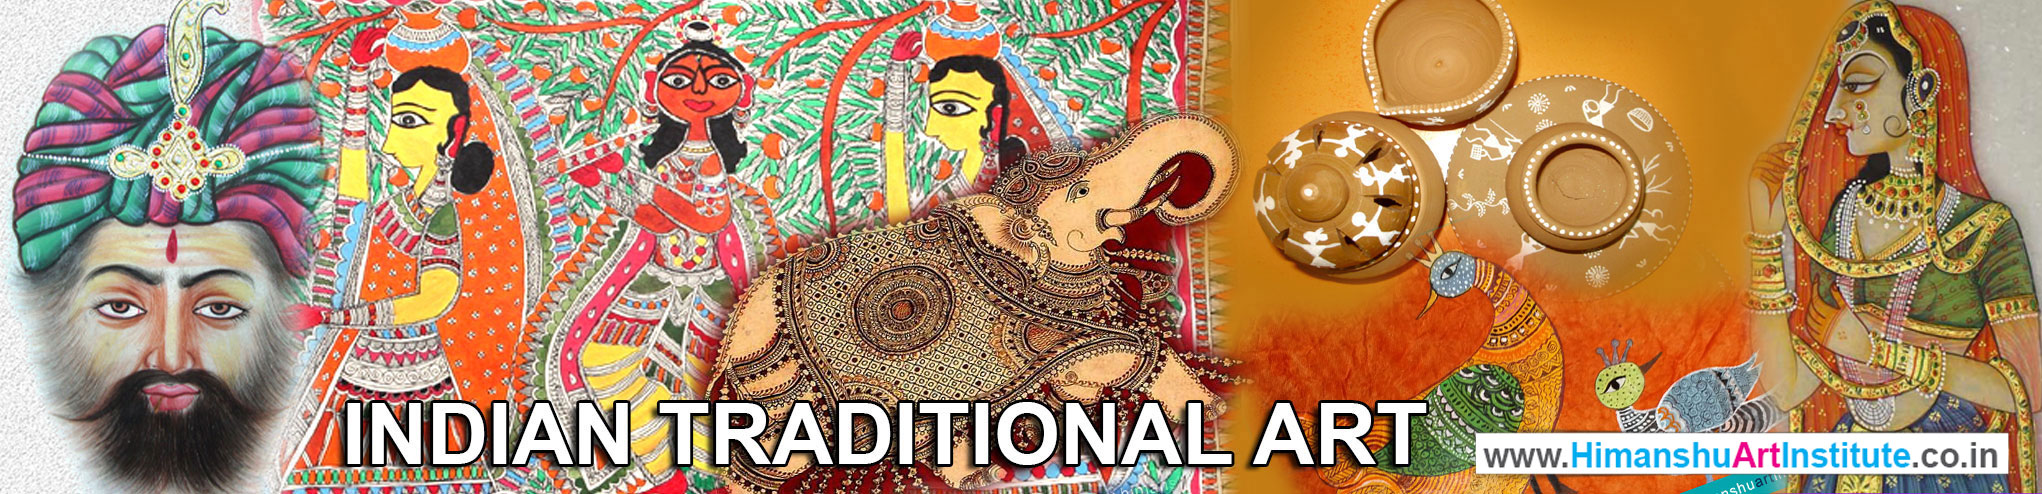 Indian Traditional, Indian Folk Art Classes in Delhi